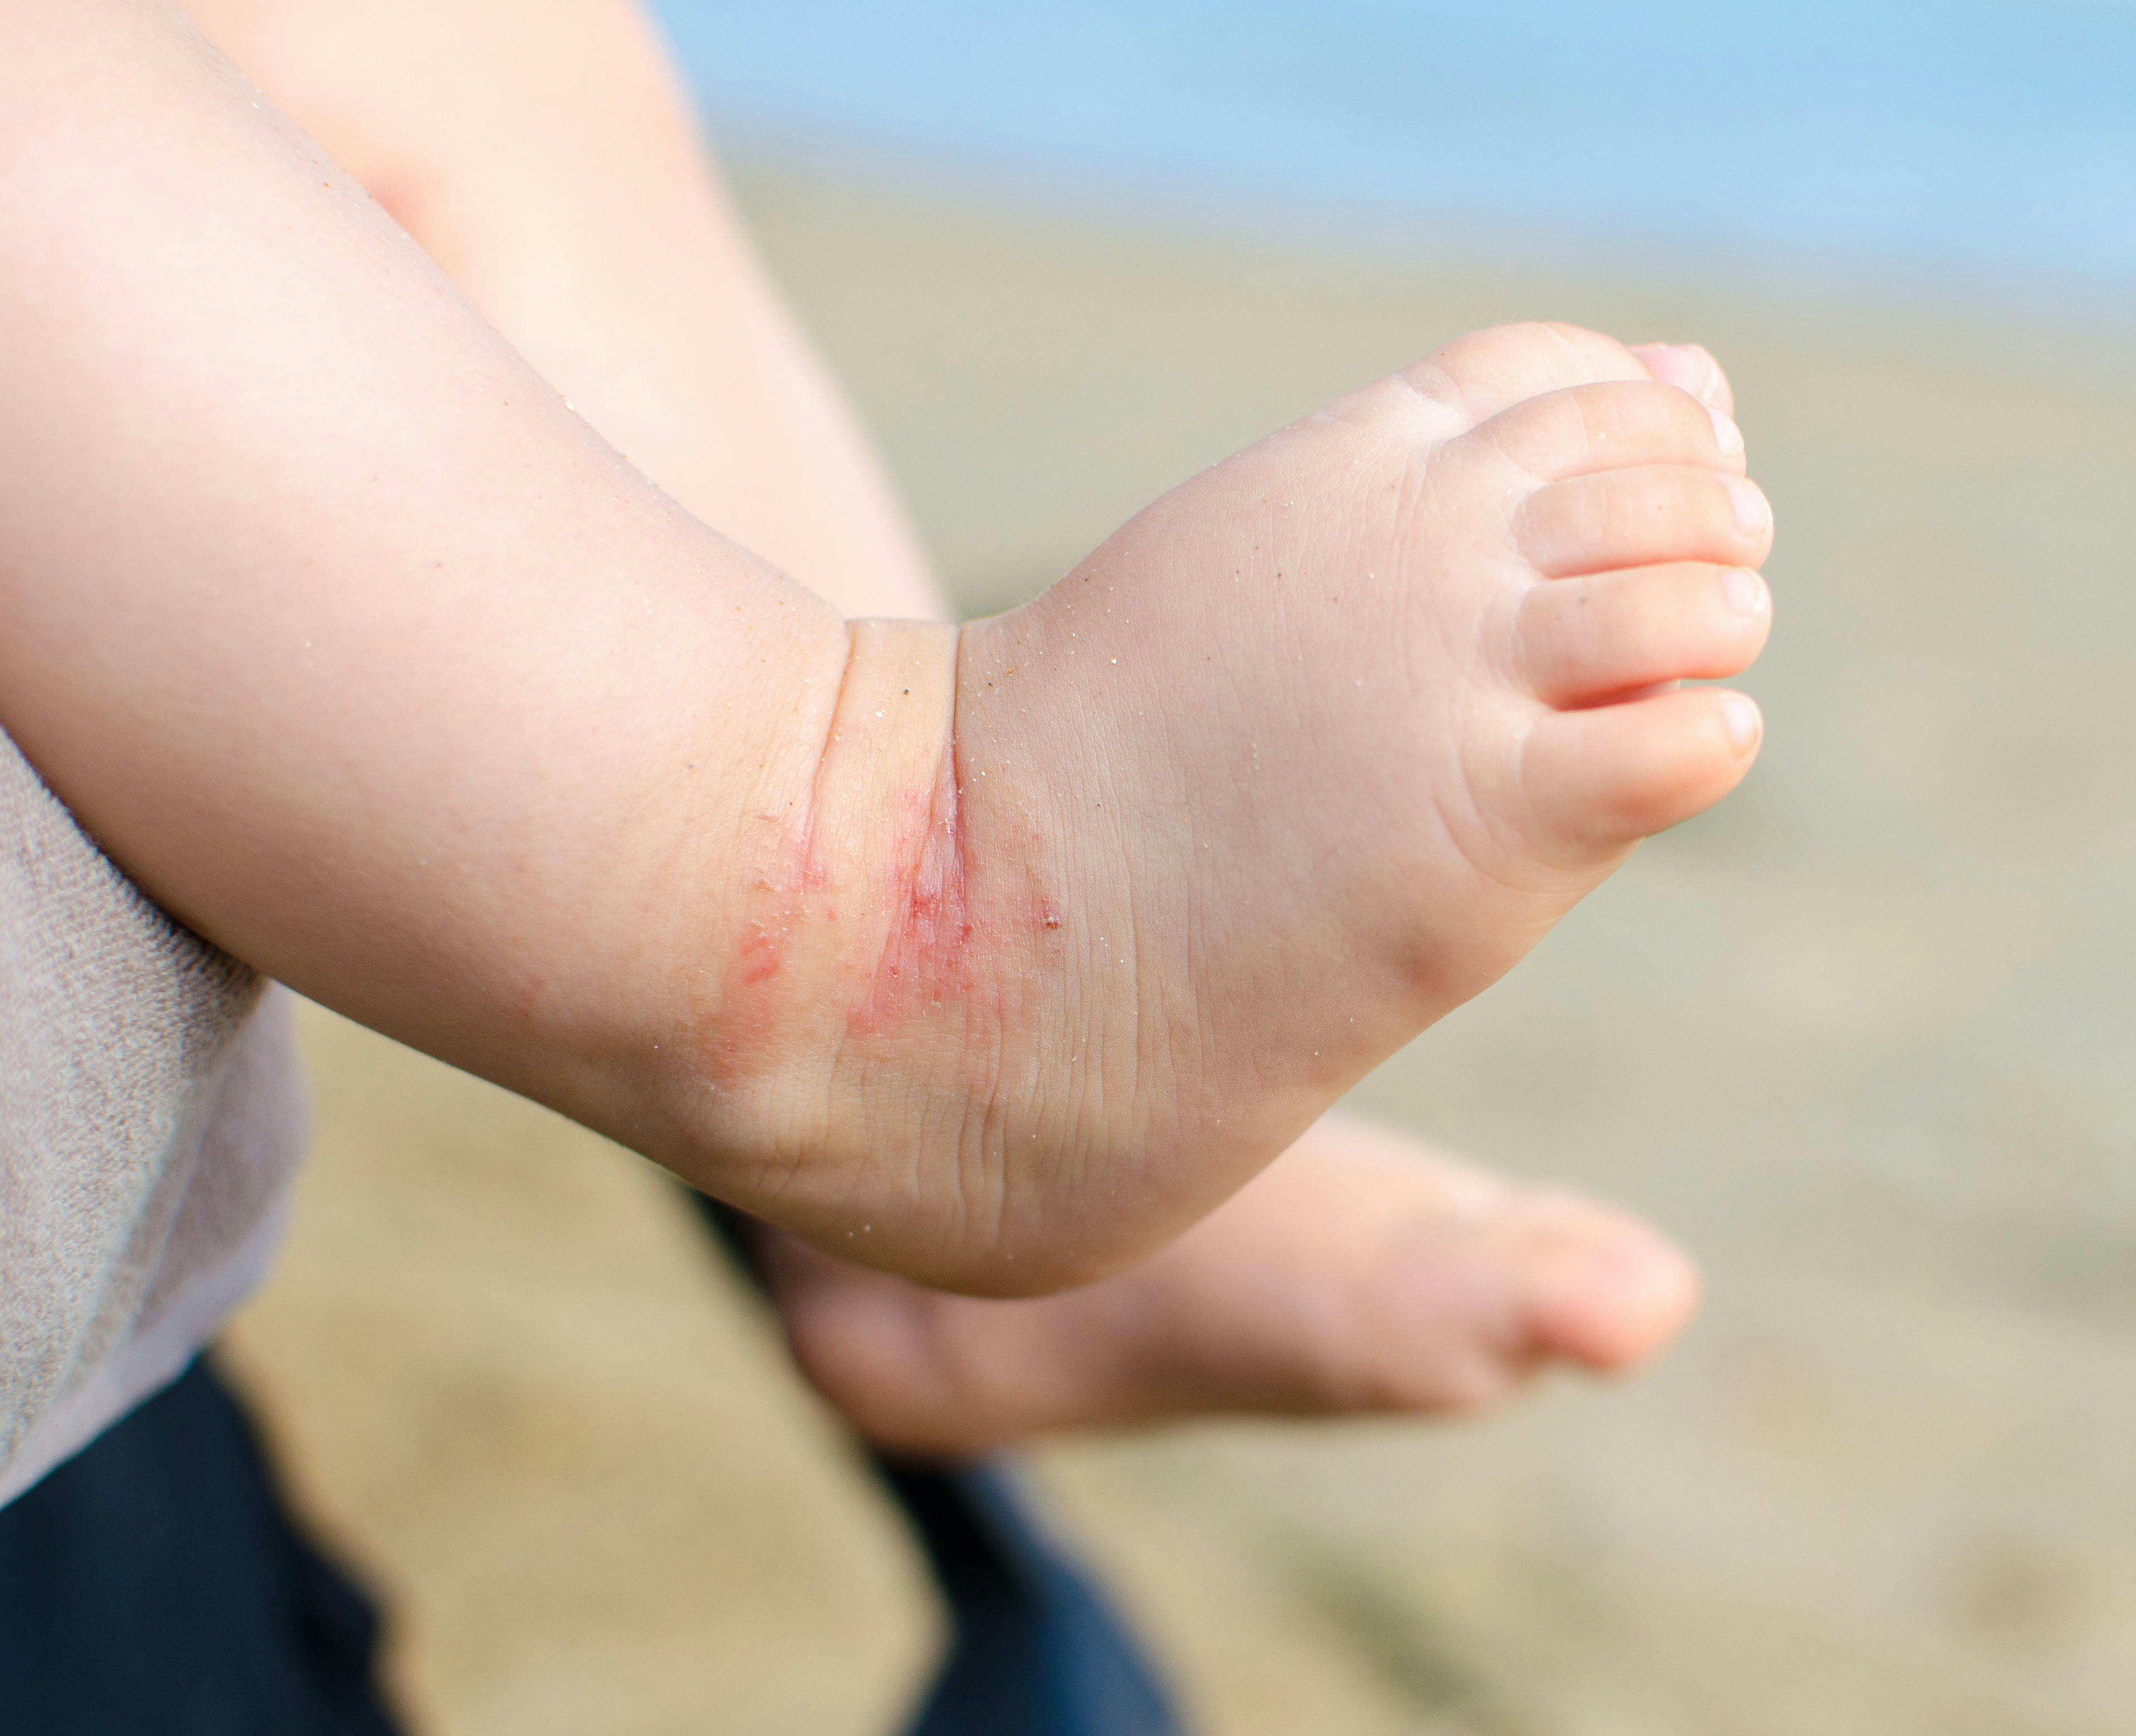 pediatric atopic dermatitis on foot.